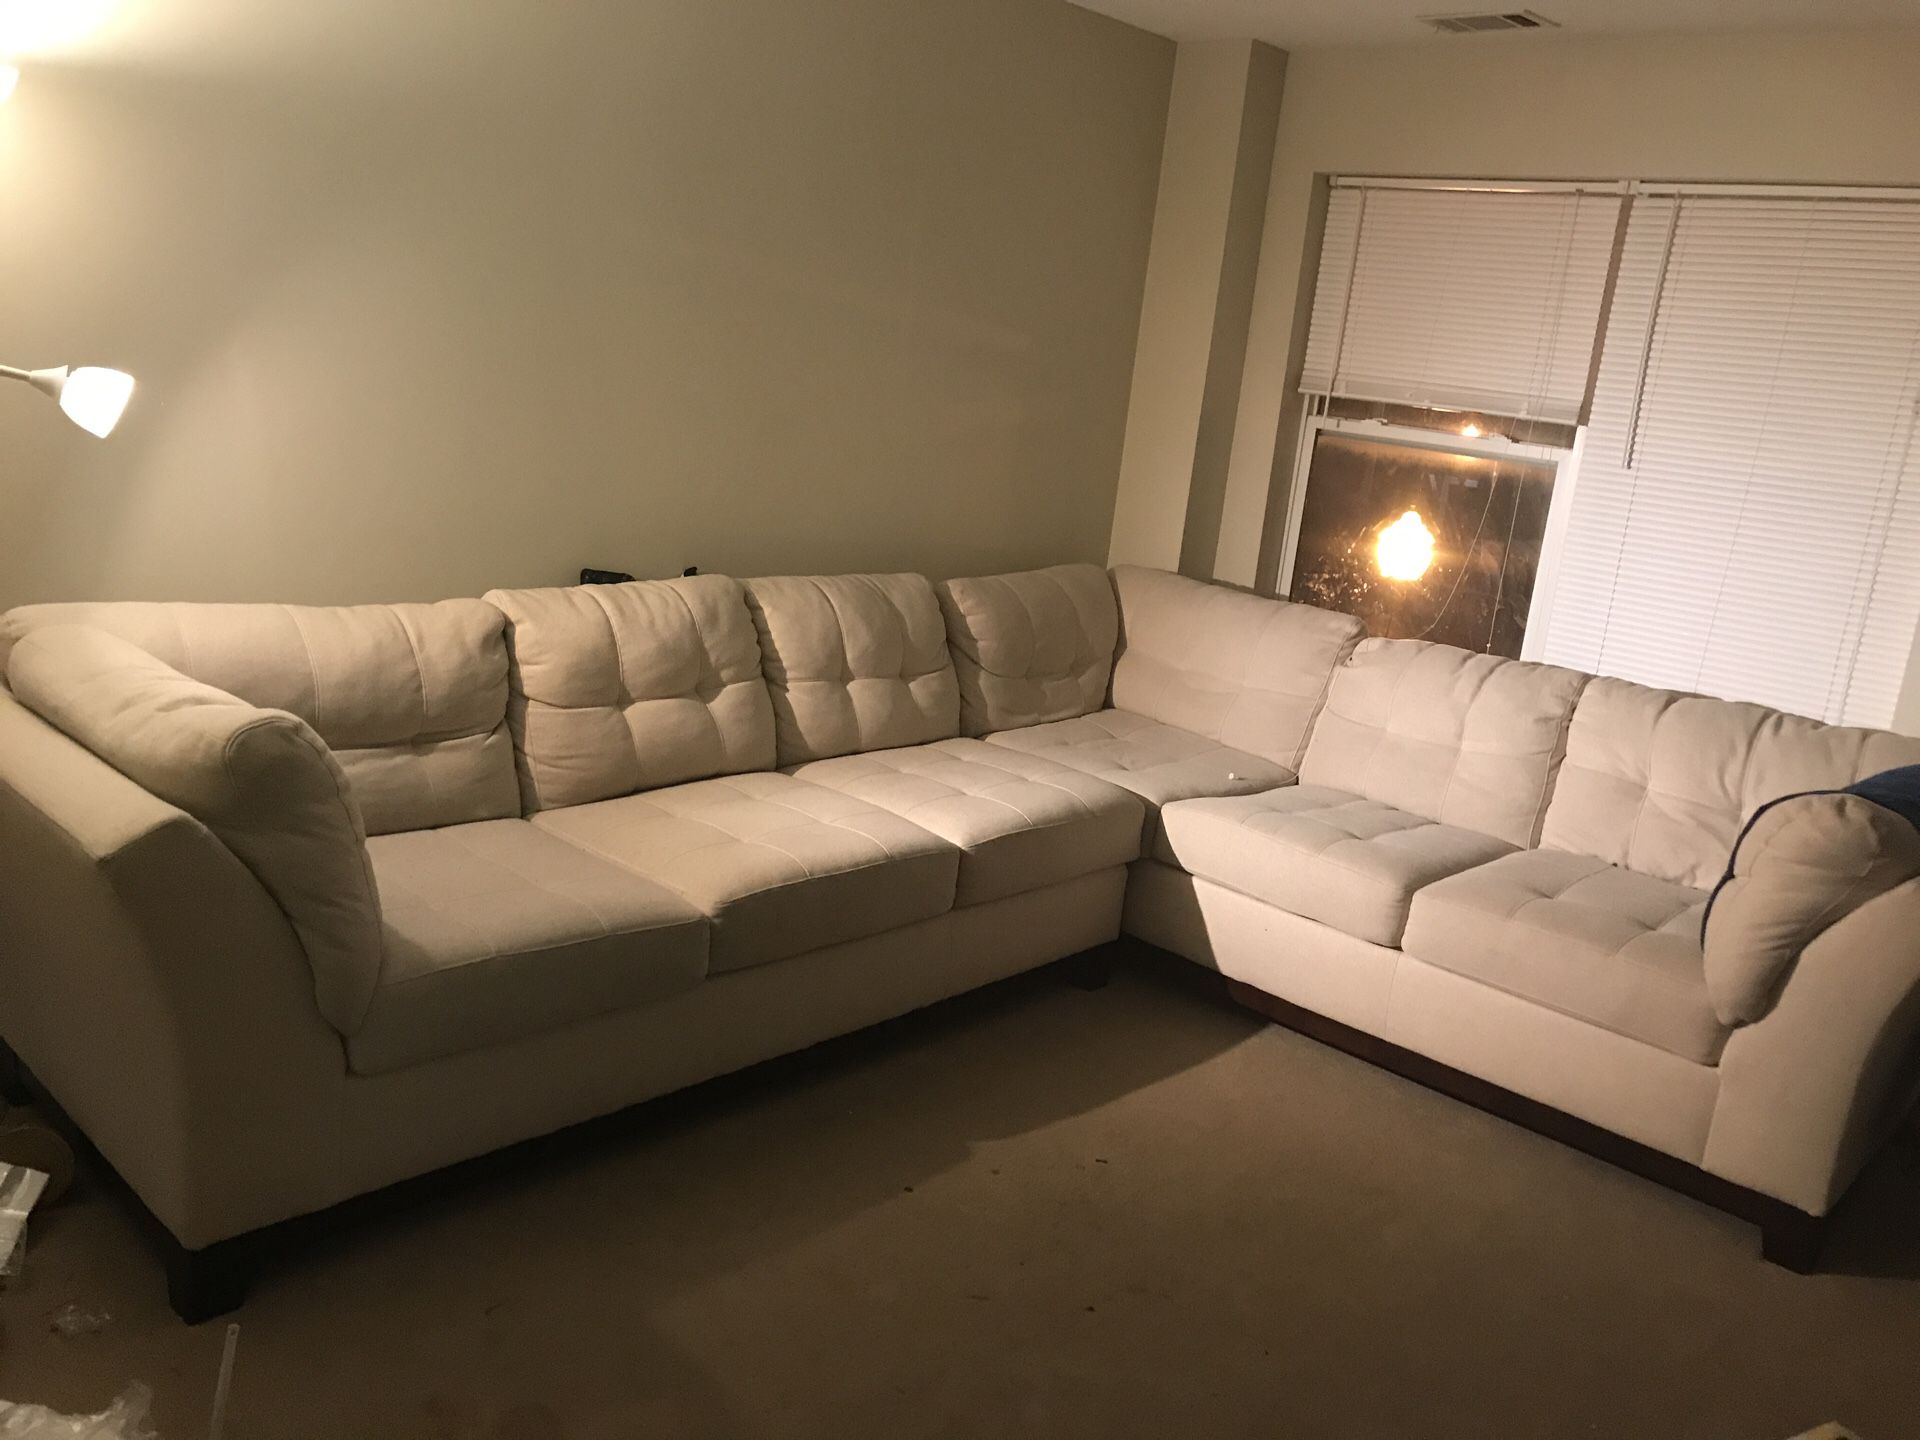 Used value city sofa